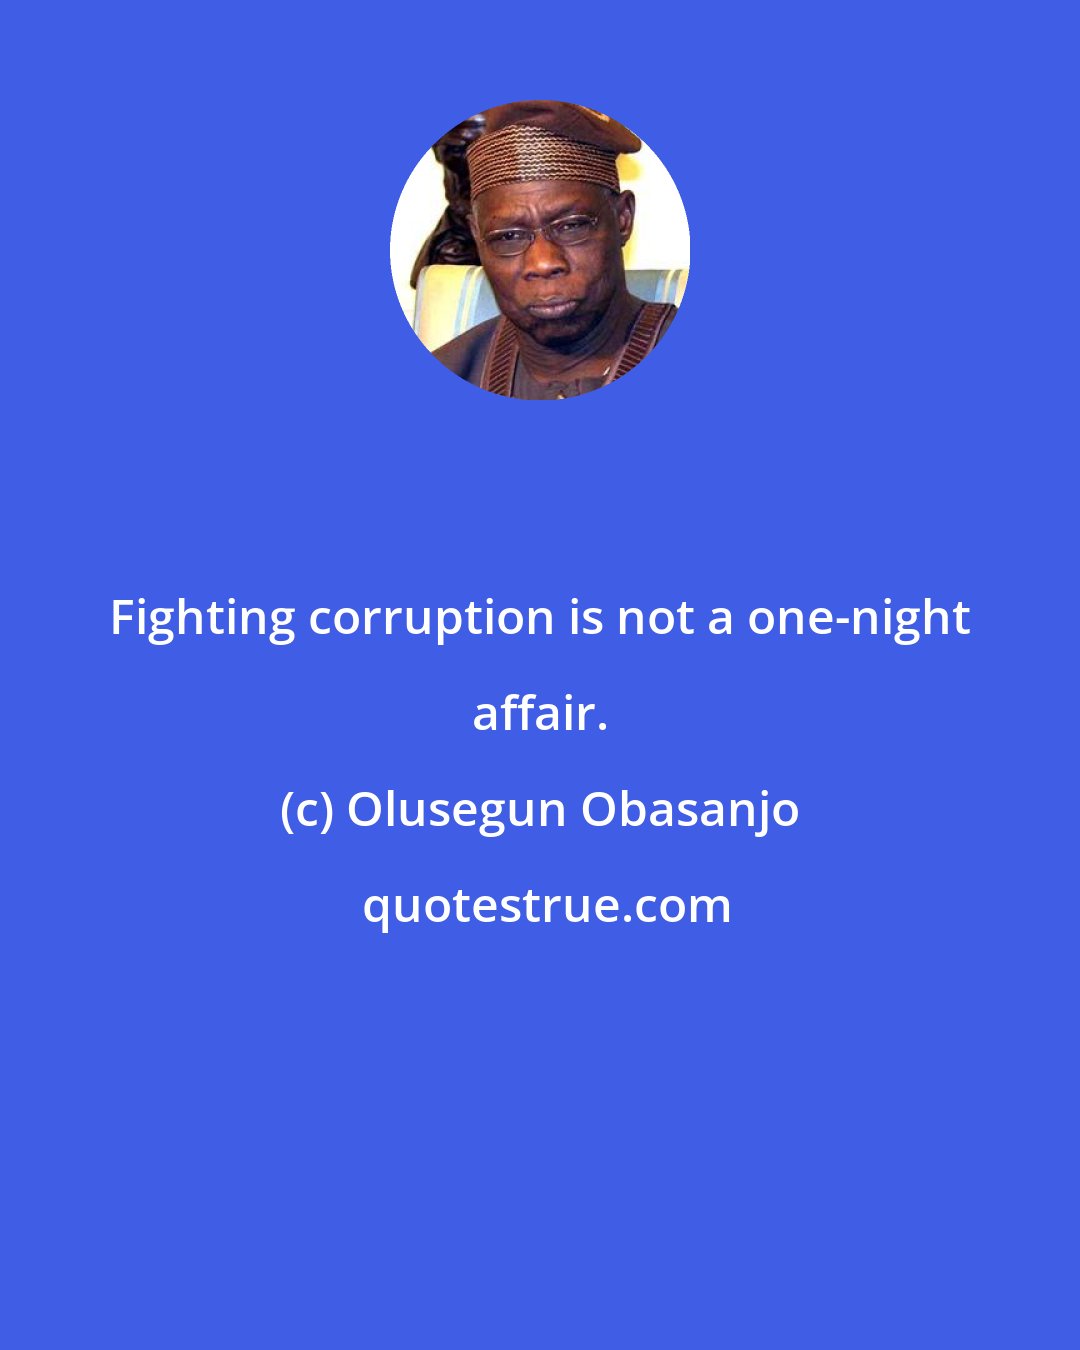 Olusegun Obasanjo: Fighting corruption is not a one-night affair.